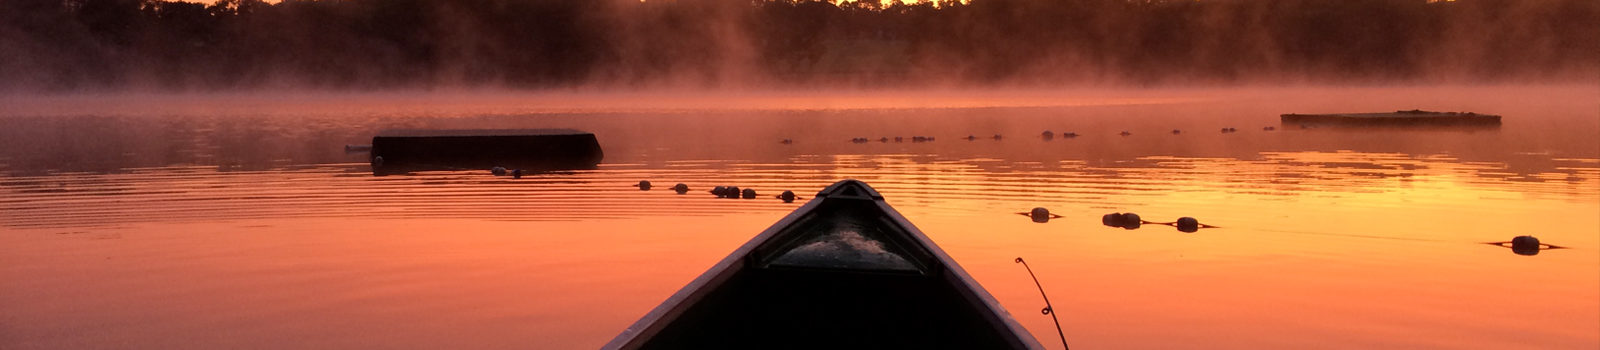 Canoe in the Morning